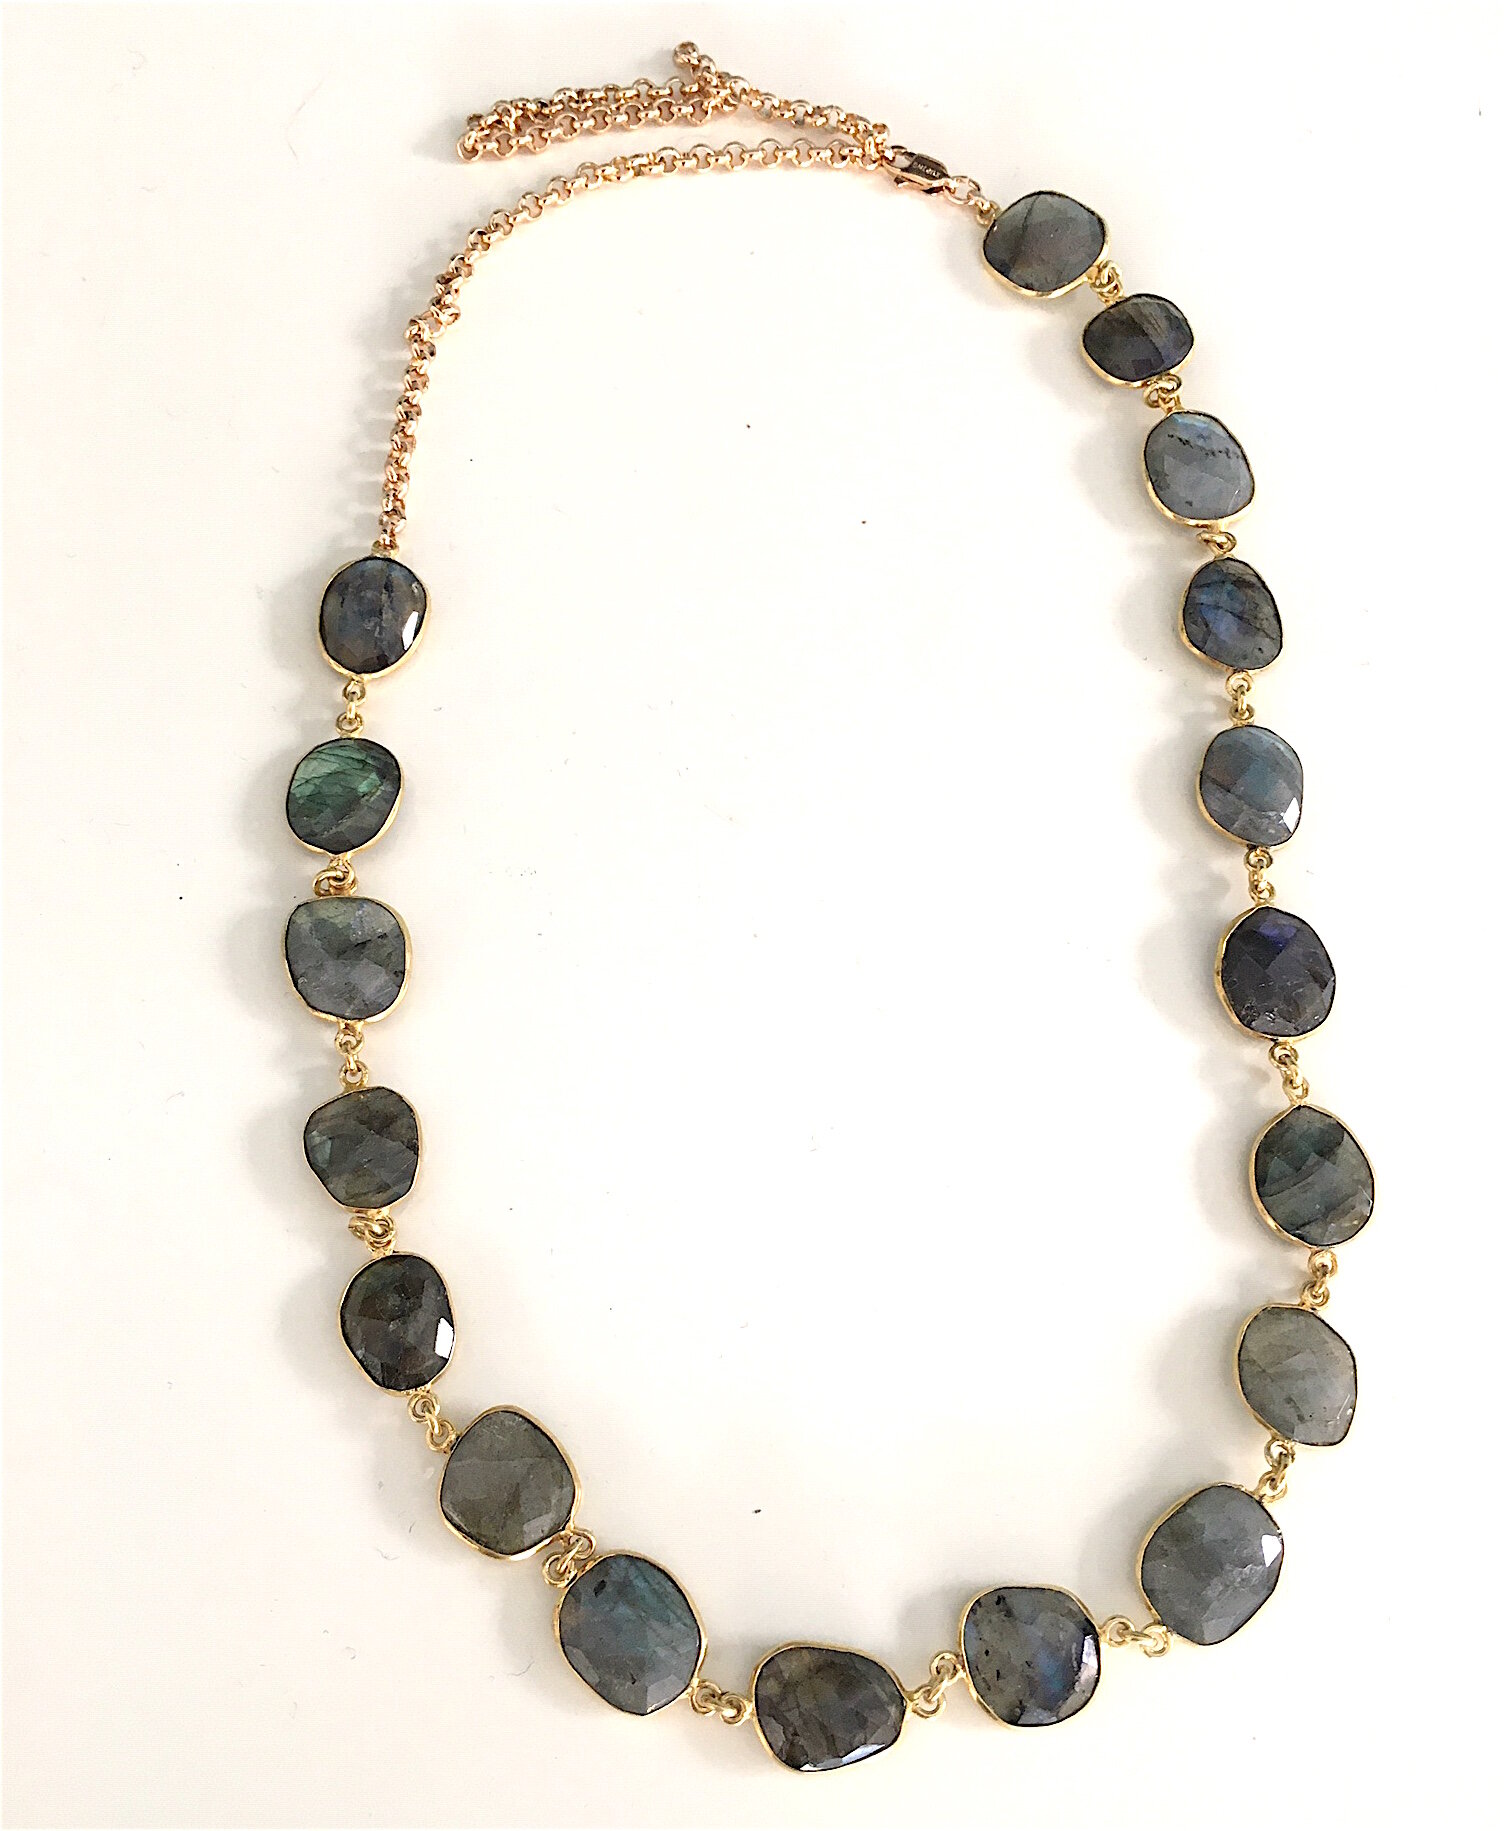  Title: Laborodite necklace  Medium: semi-precious stones, 14k gold plated  Price: £245 